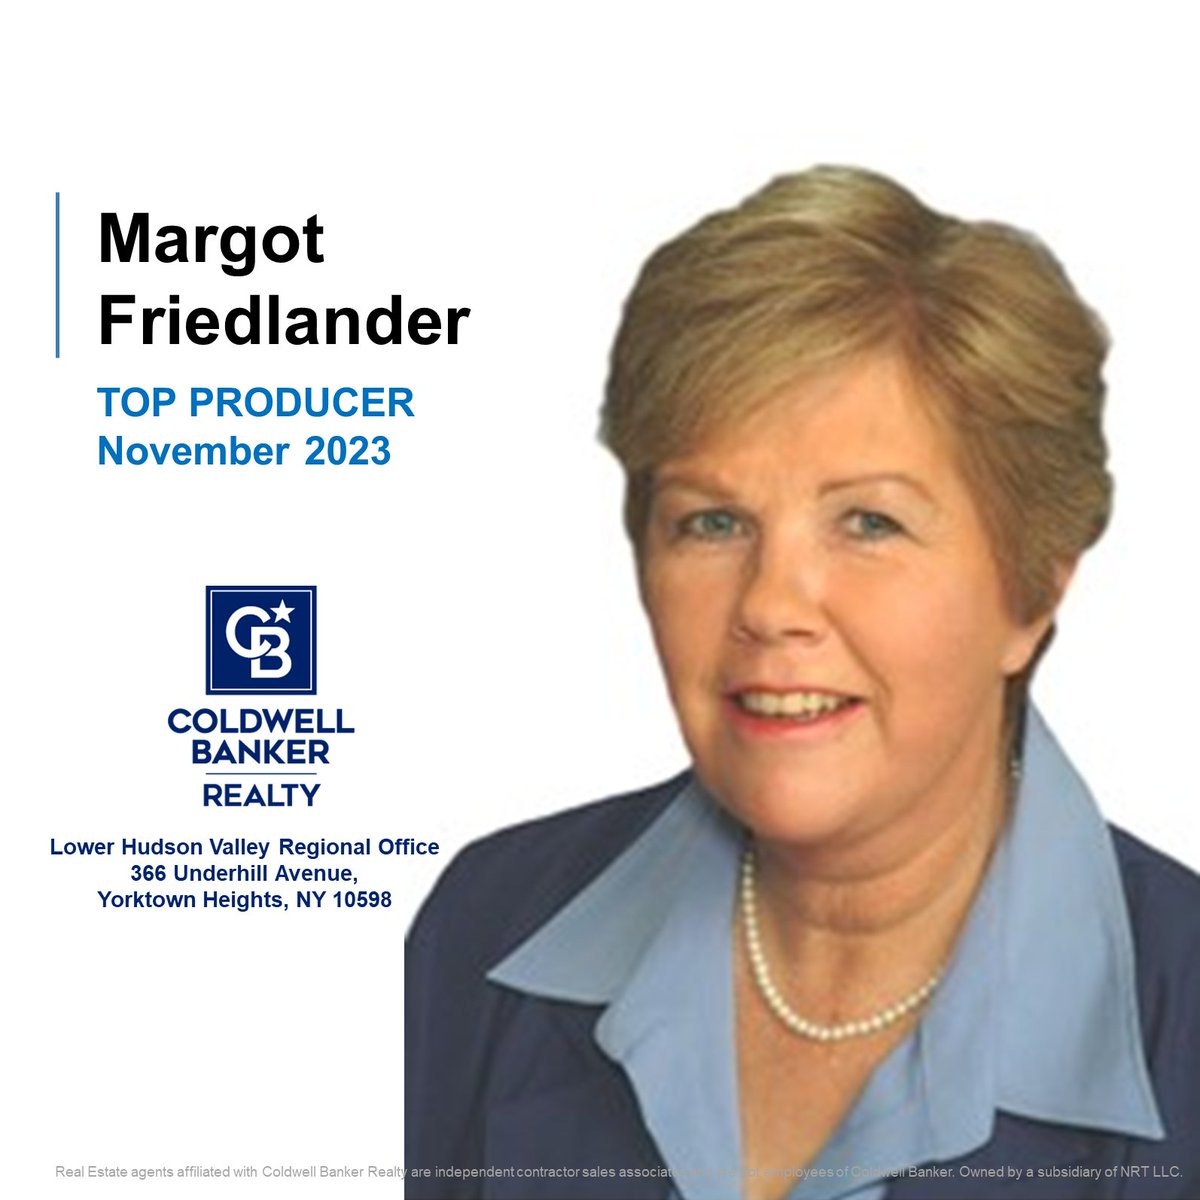 Congratulations to Margot Friedlander on being November’s Top Producer.
Your dedication and hard work is greatly appreciated!
#congratulations #cbr #ctwc #realestate #lhvro #cbproud #cbtheplacetobe #bestagent #agentofcoldwellbanker #margotfriedlander